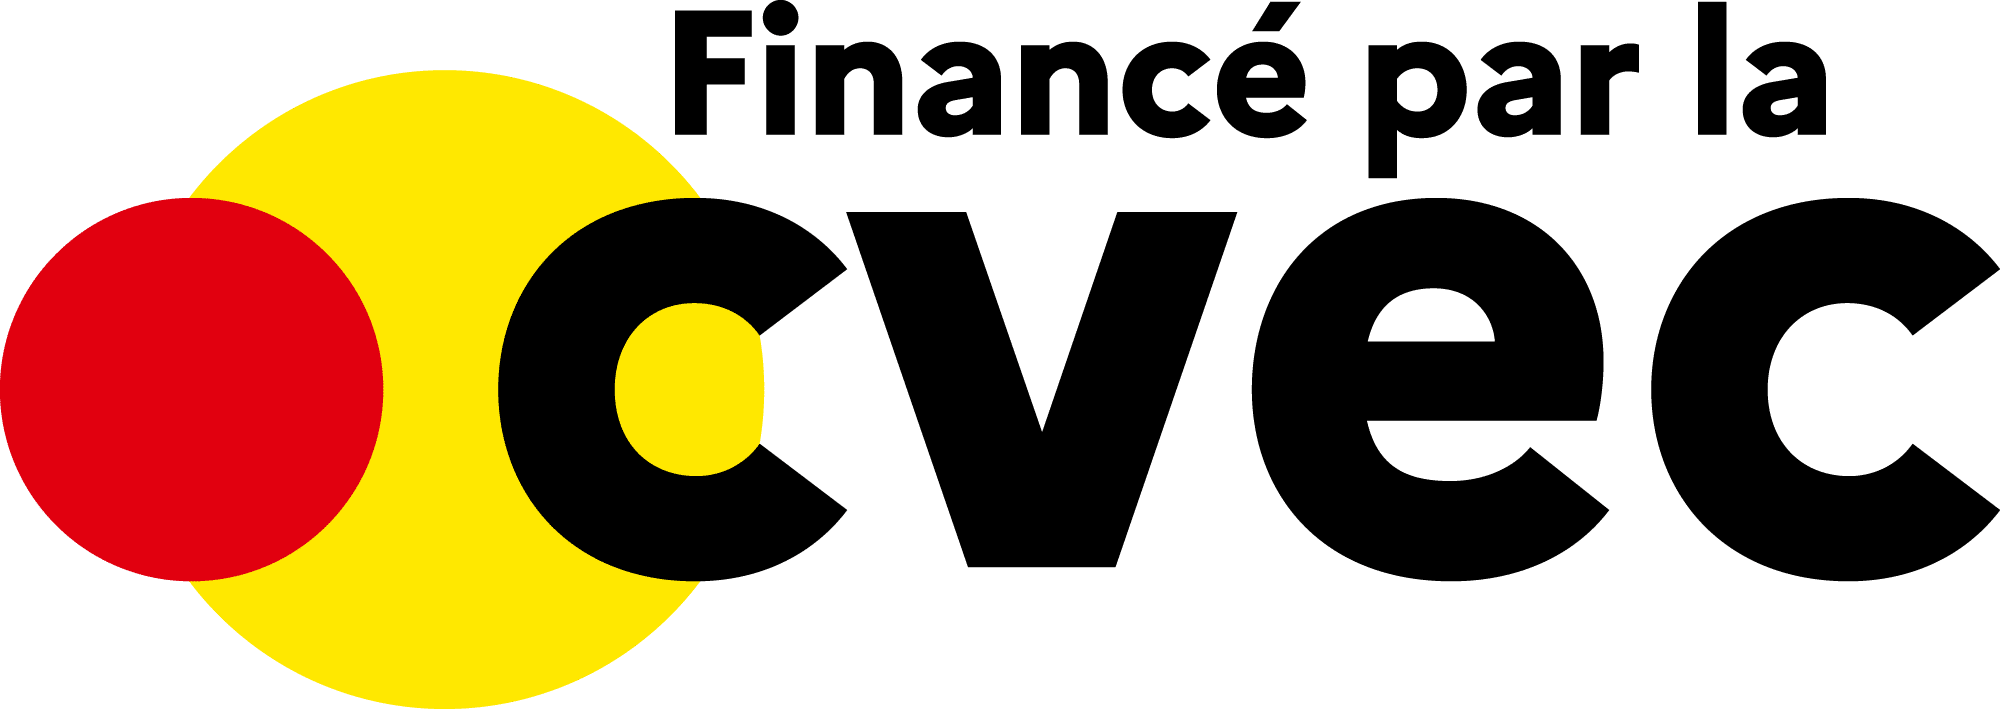 CVEC finance par noir 1 rvb